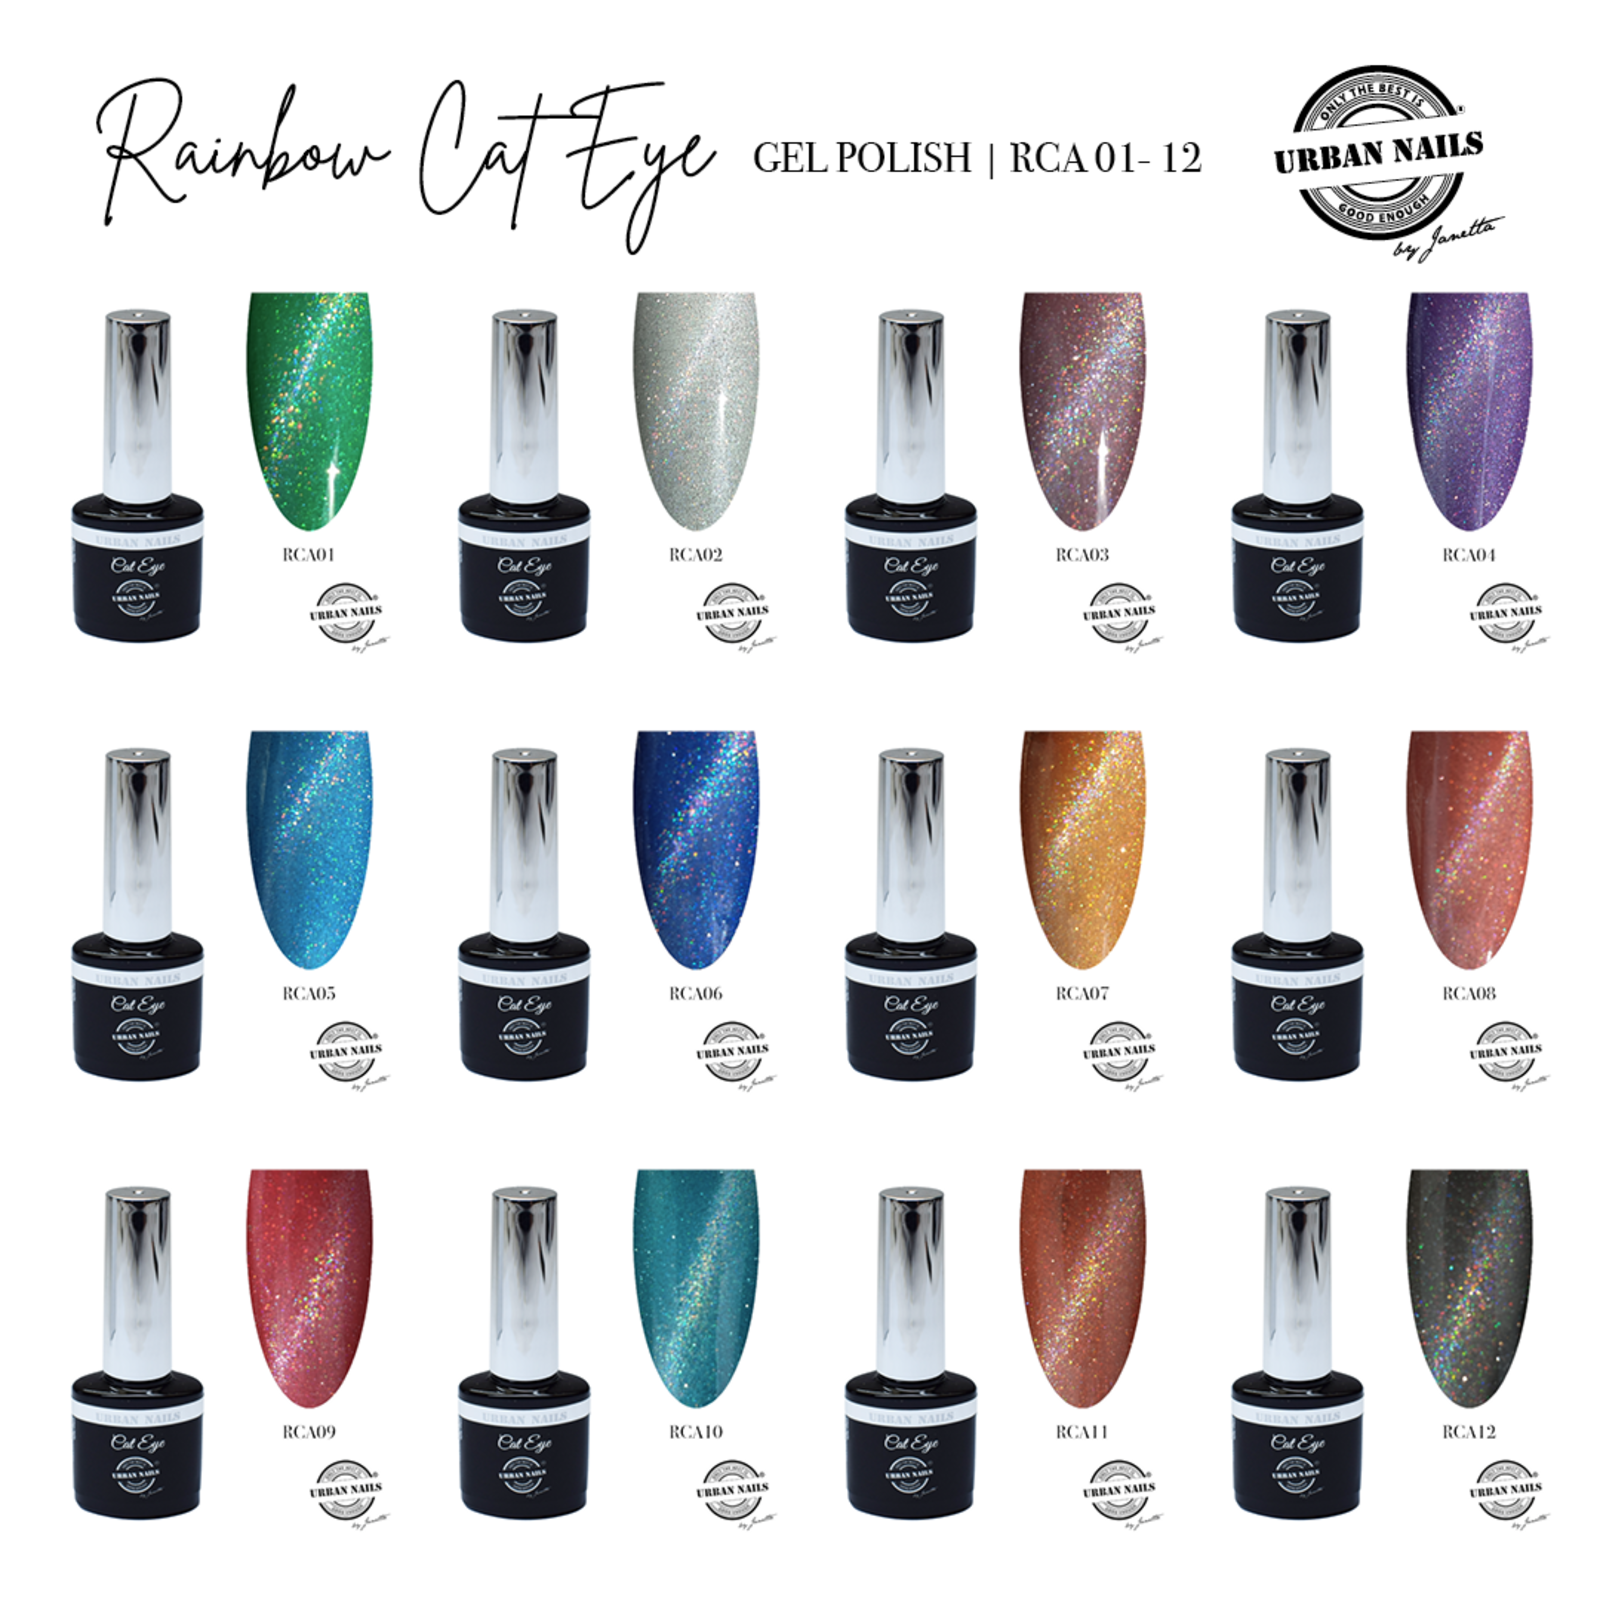 Urban nails Rainbow Cat eye RCA-09 7,5 ml